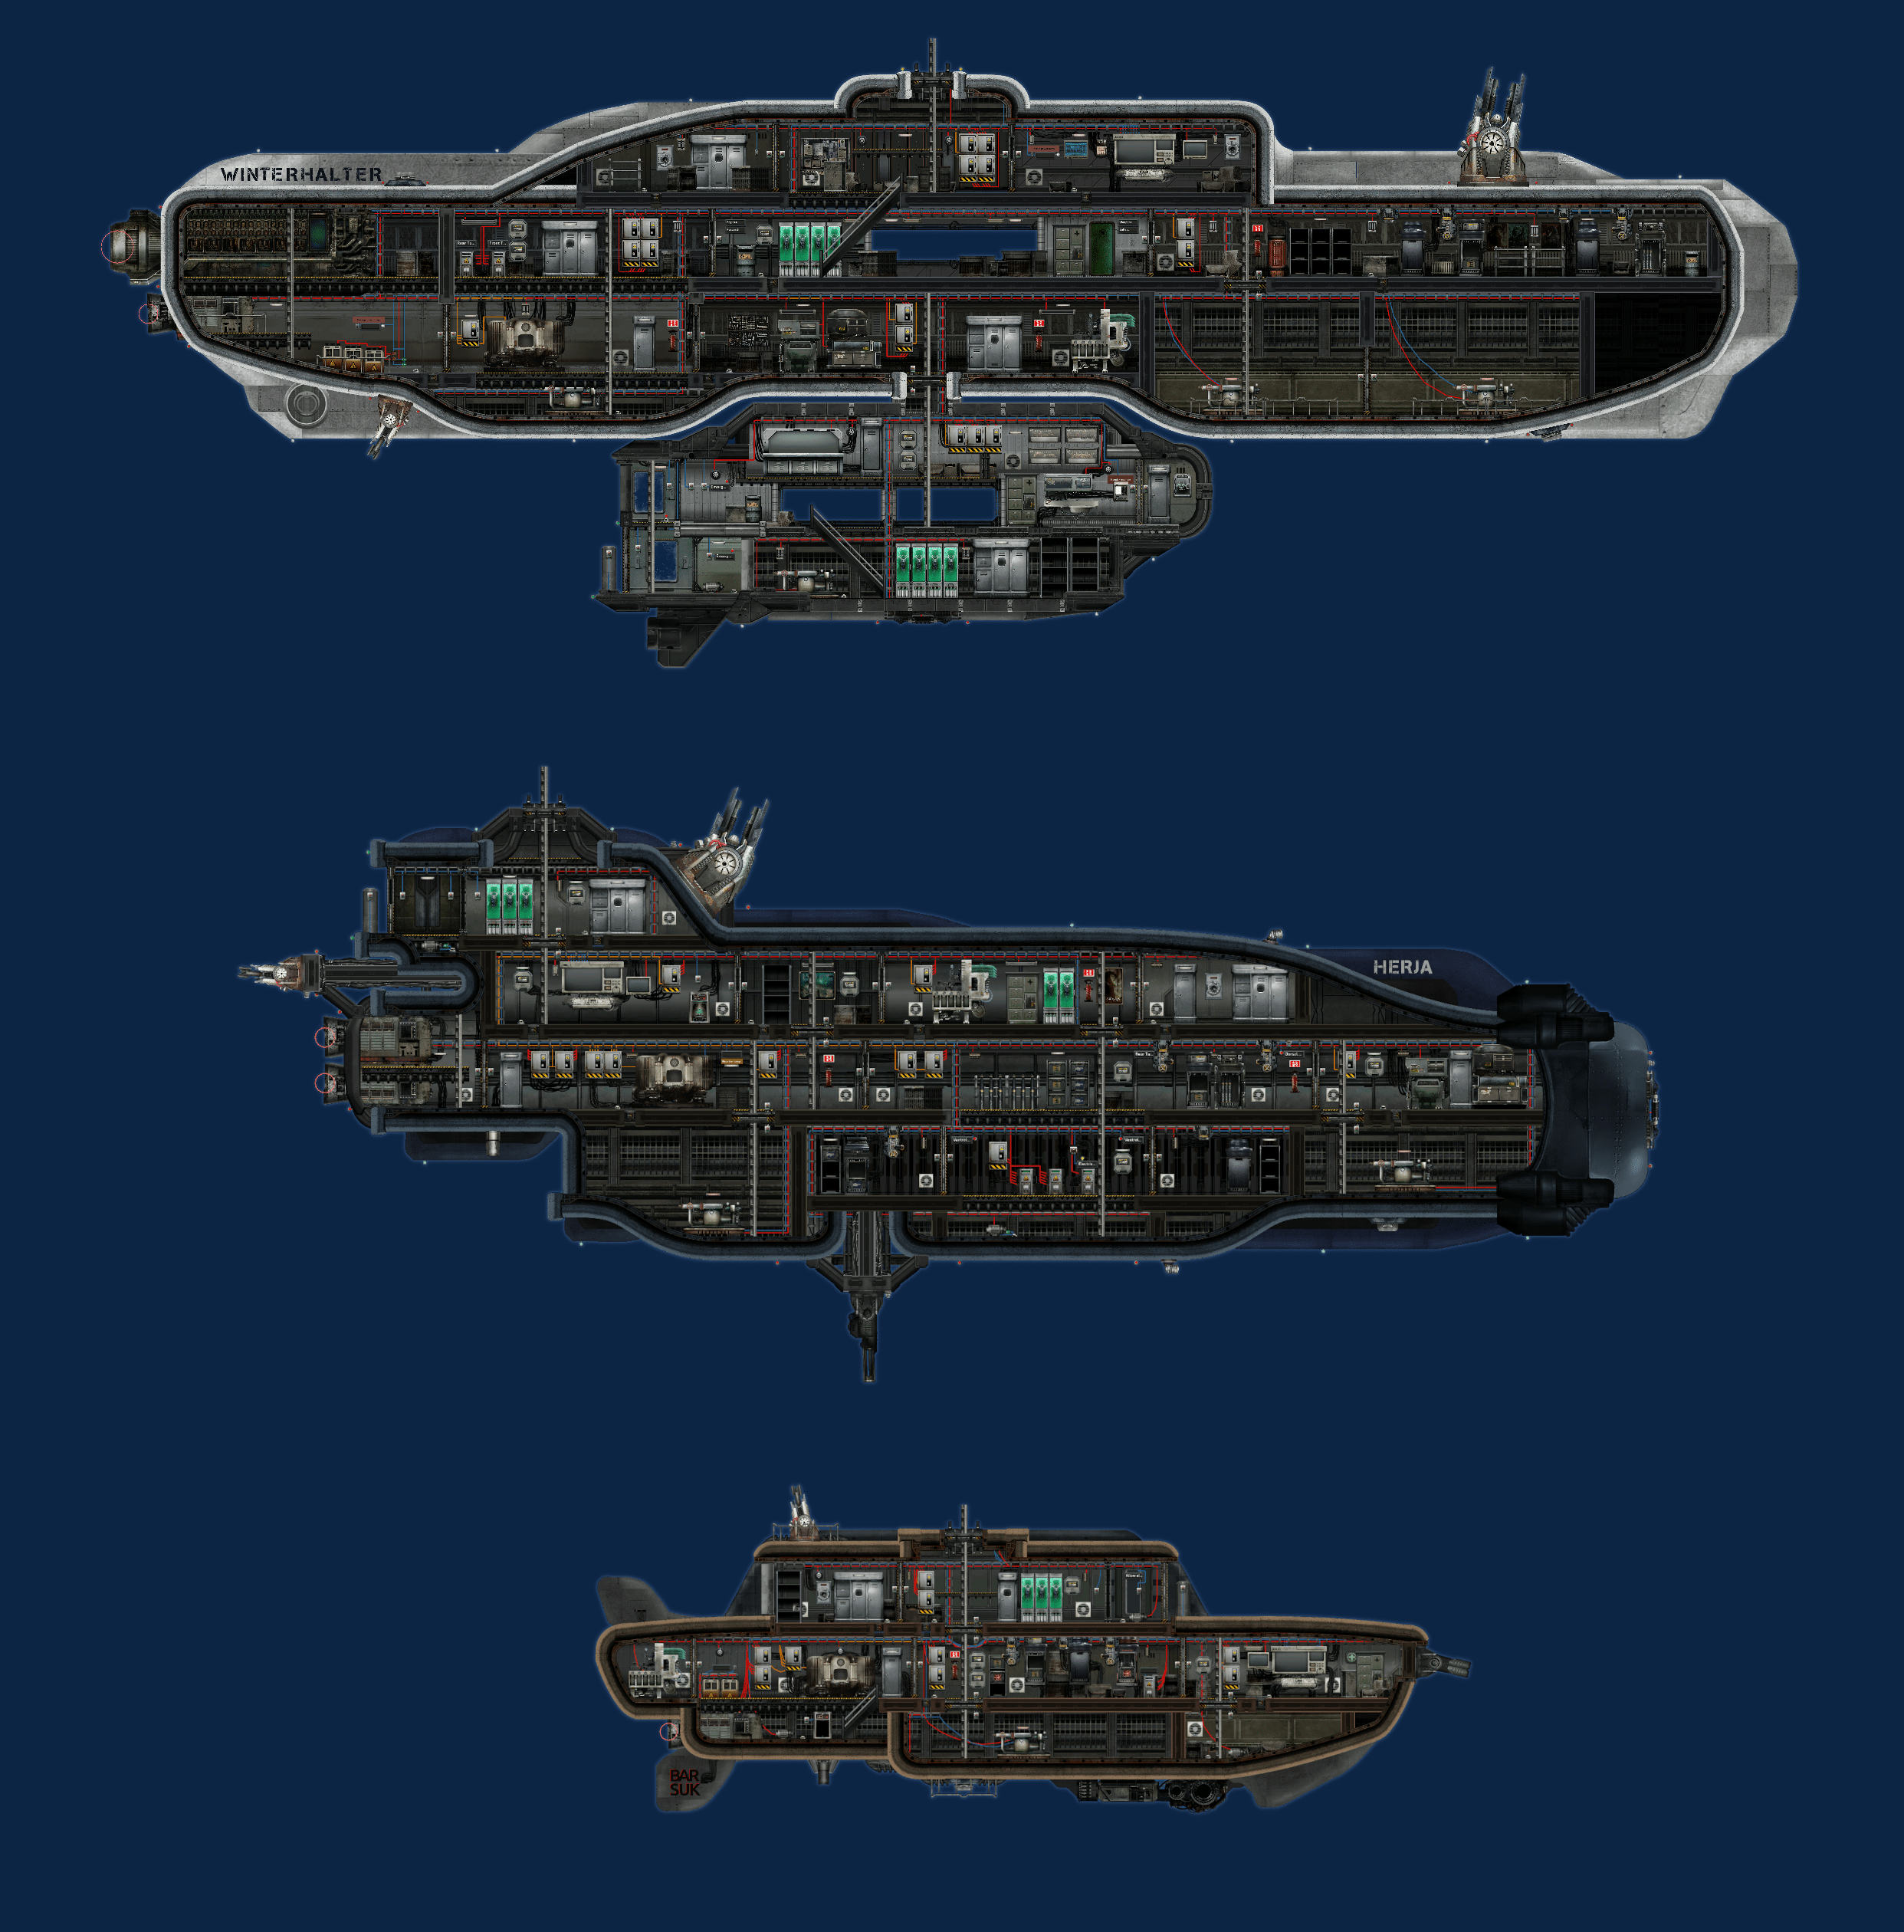 Barotrauma submarines Winterhalter, Herja and Barsuk